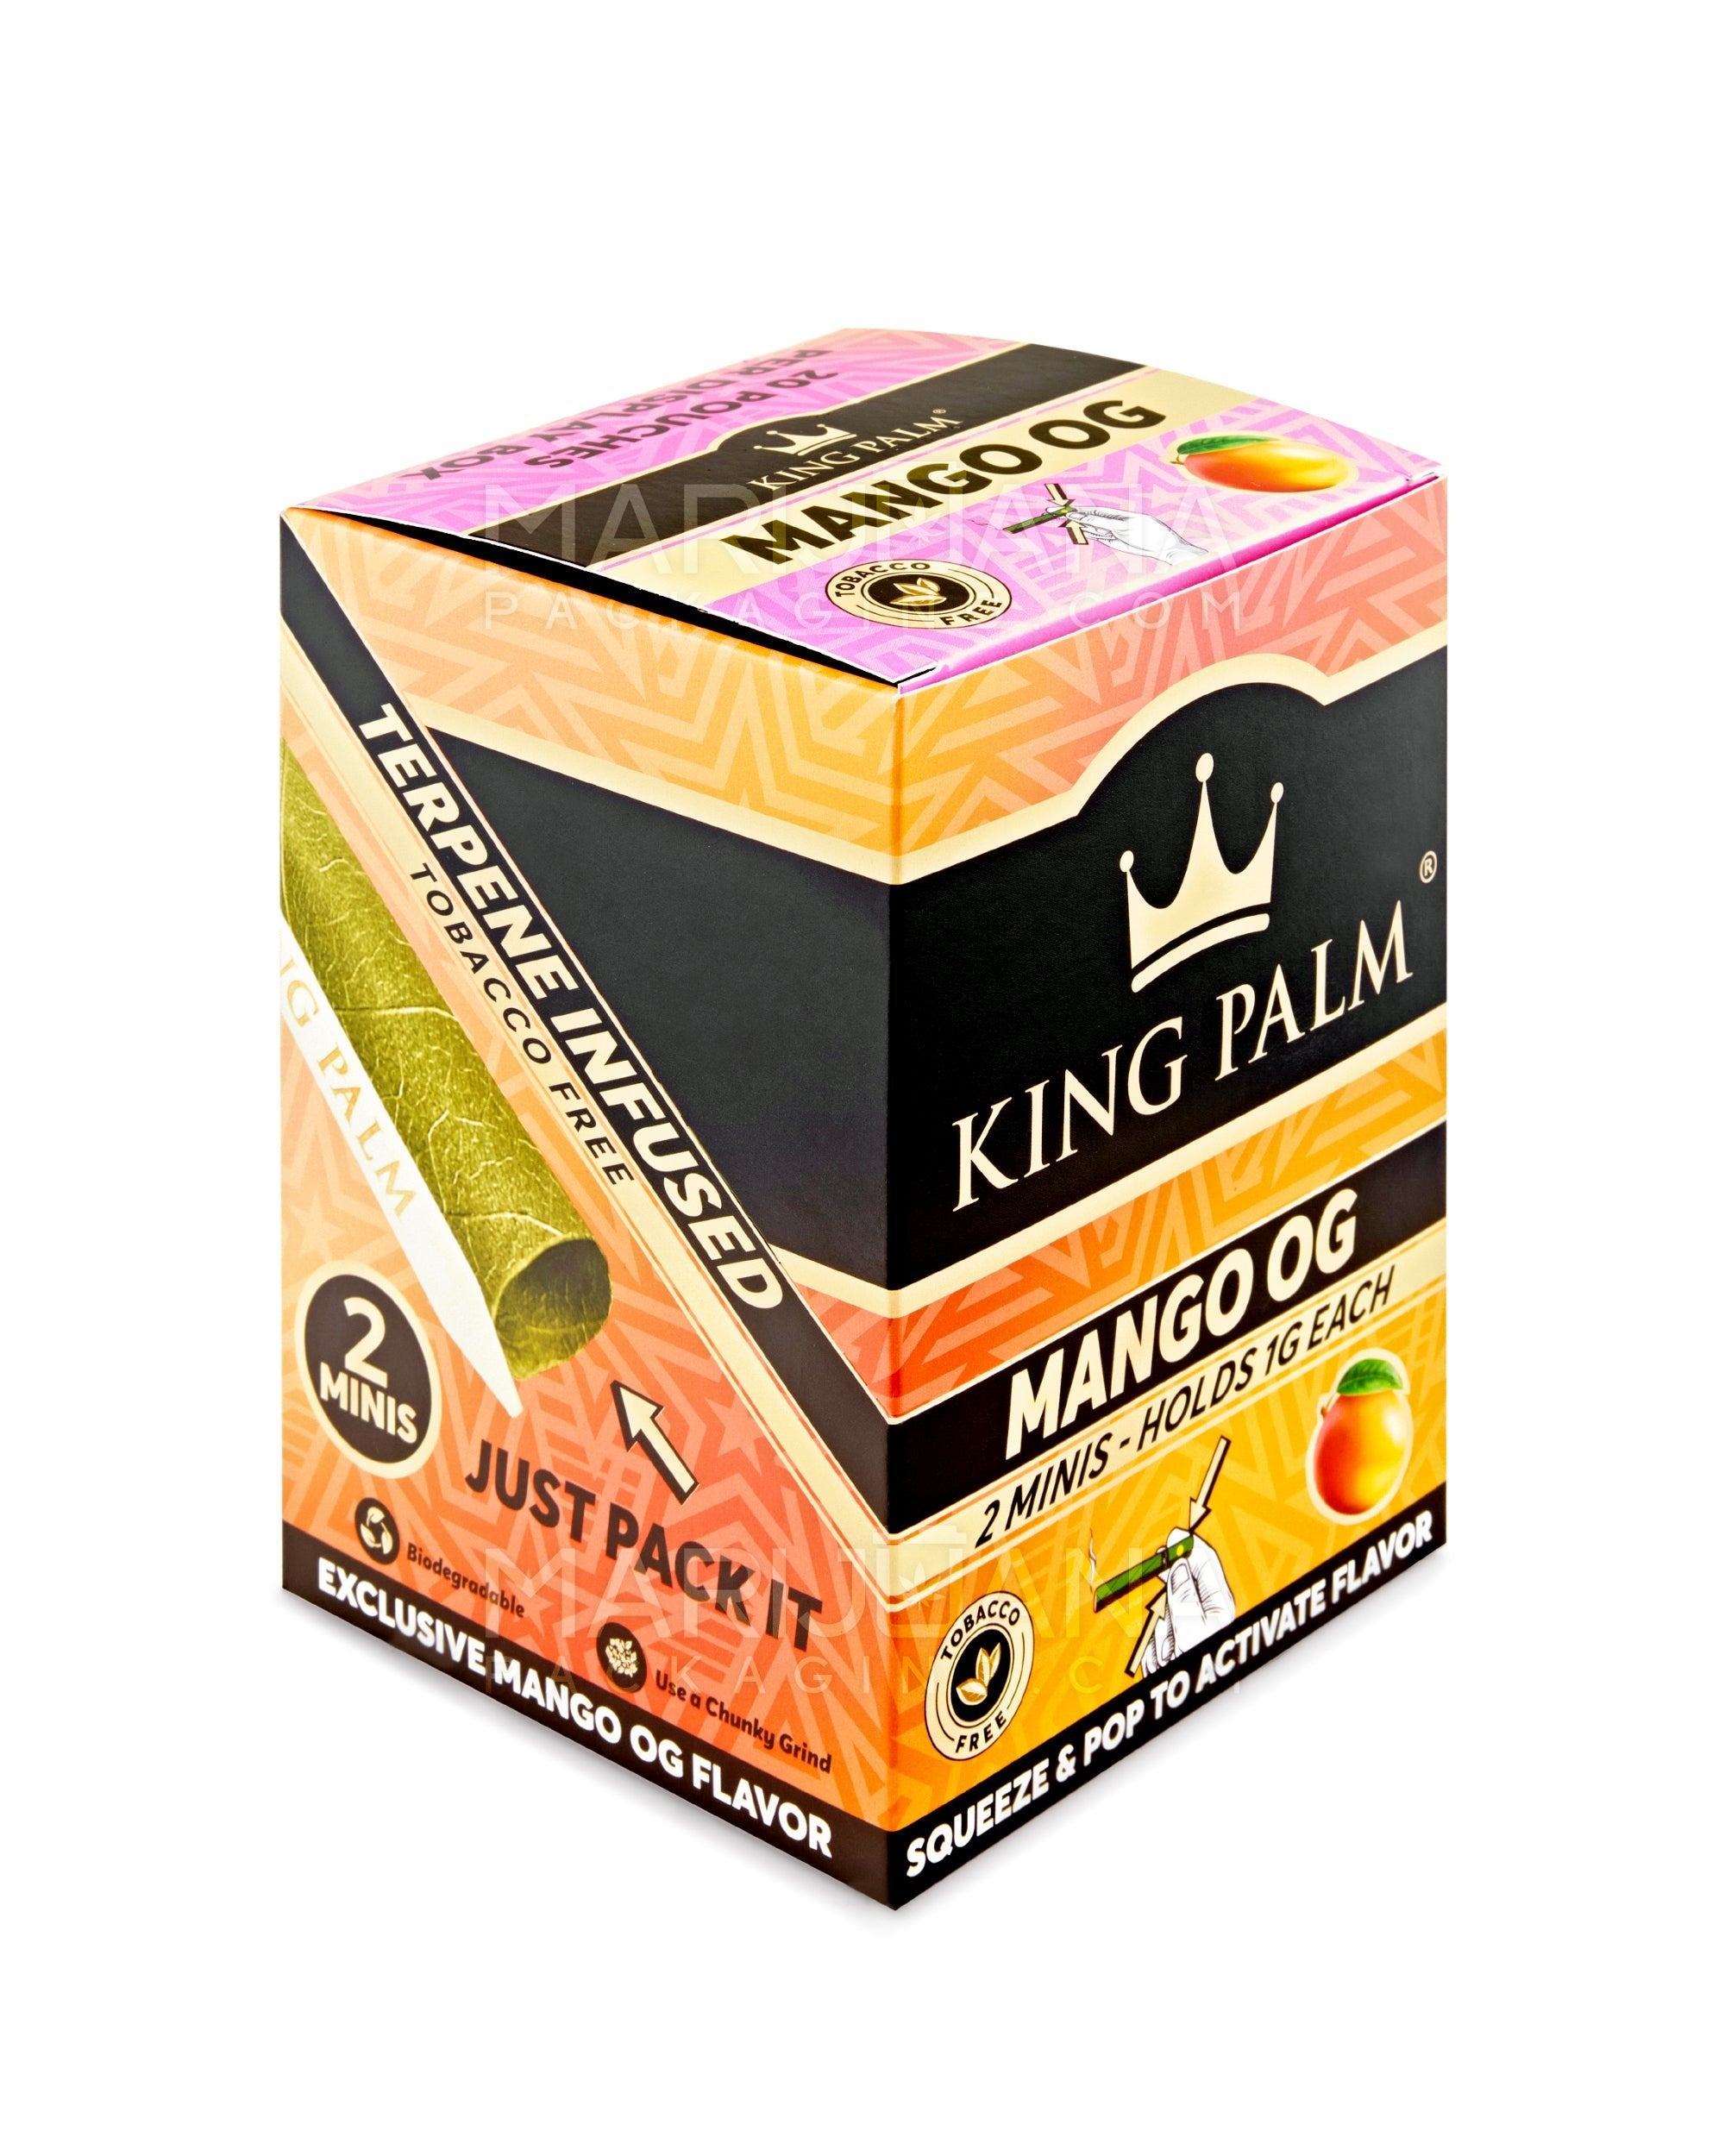 KING PALM | 'Retail Display' Mini Green Natural Leaf Blunt Wraps | 84mm - Mango OG - 20 Count - 2